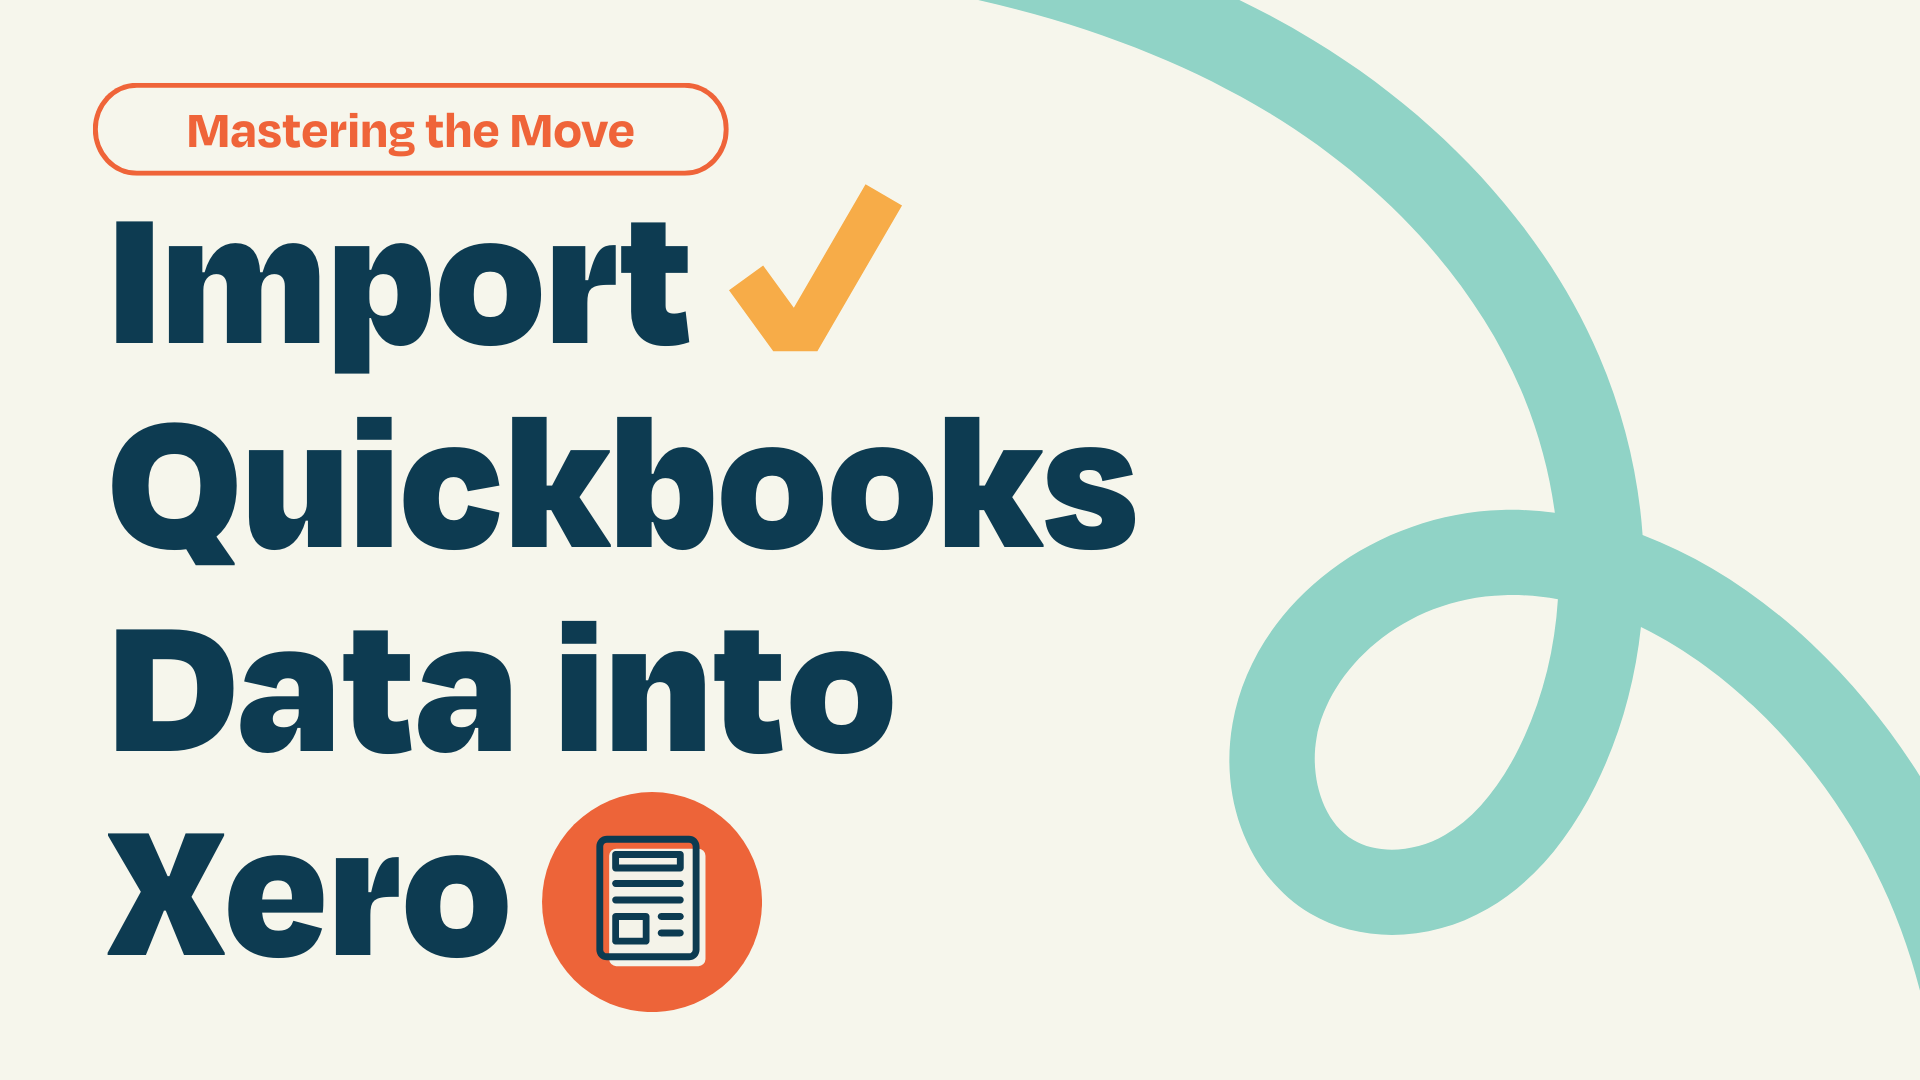 Mastering the Move: Import QuickBooks Data into Xero with Confidence